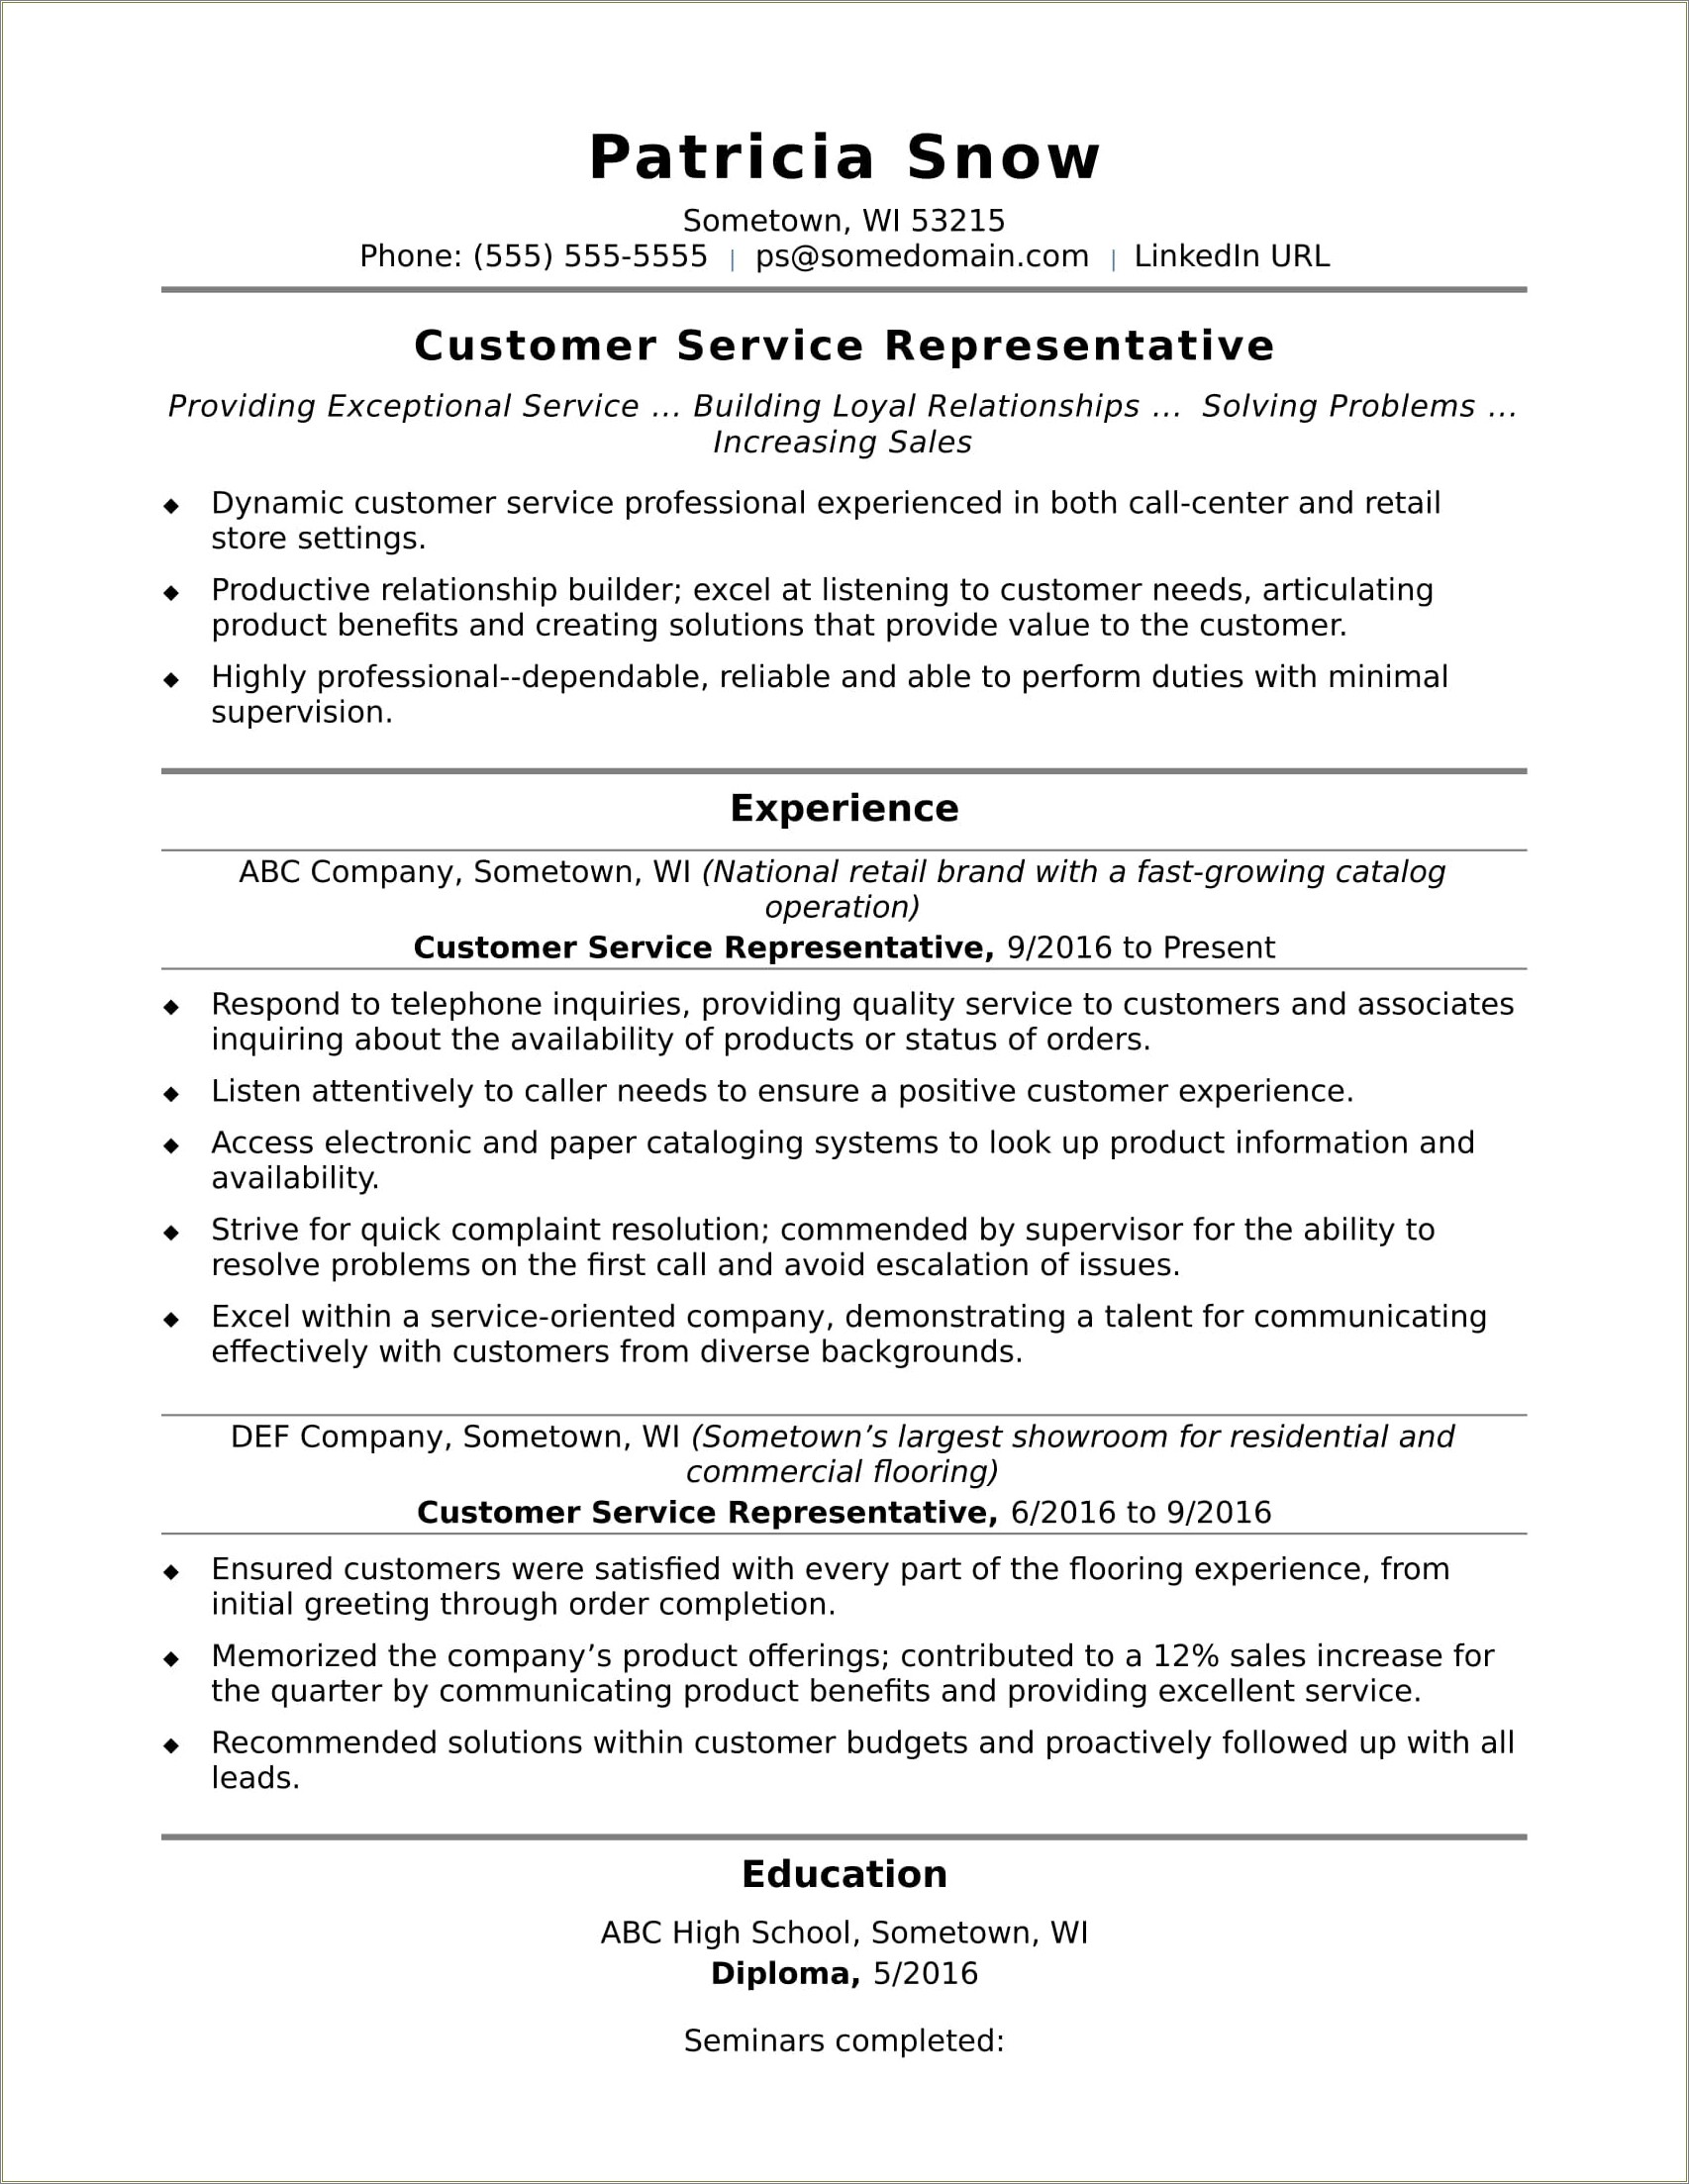 Resume Summary Examples For Sales Representative